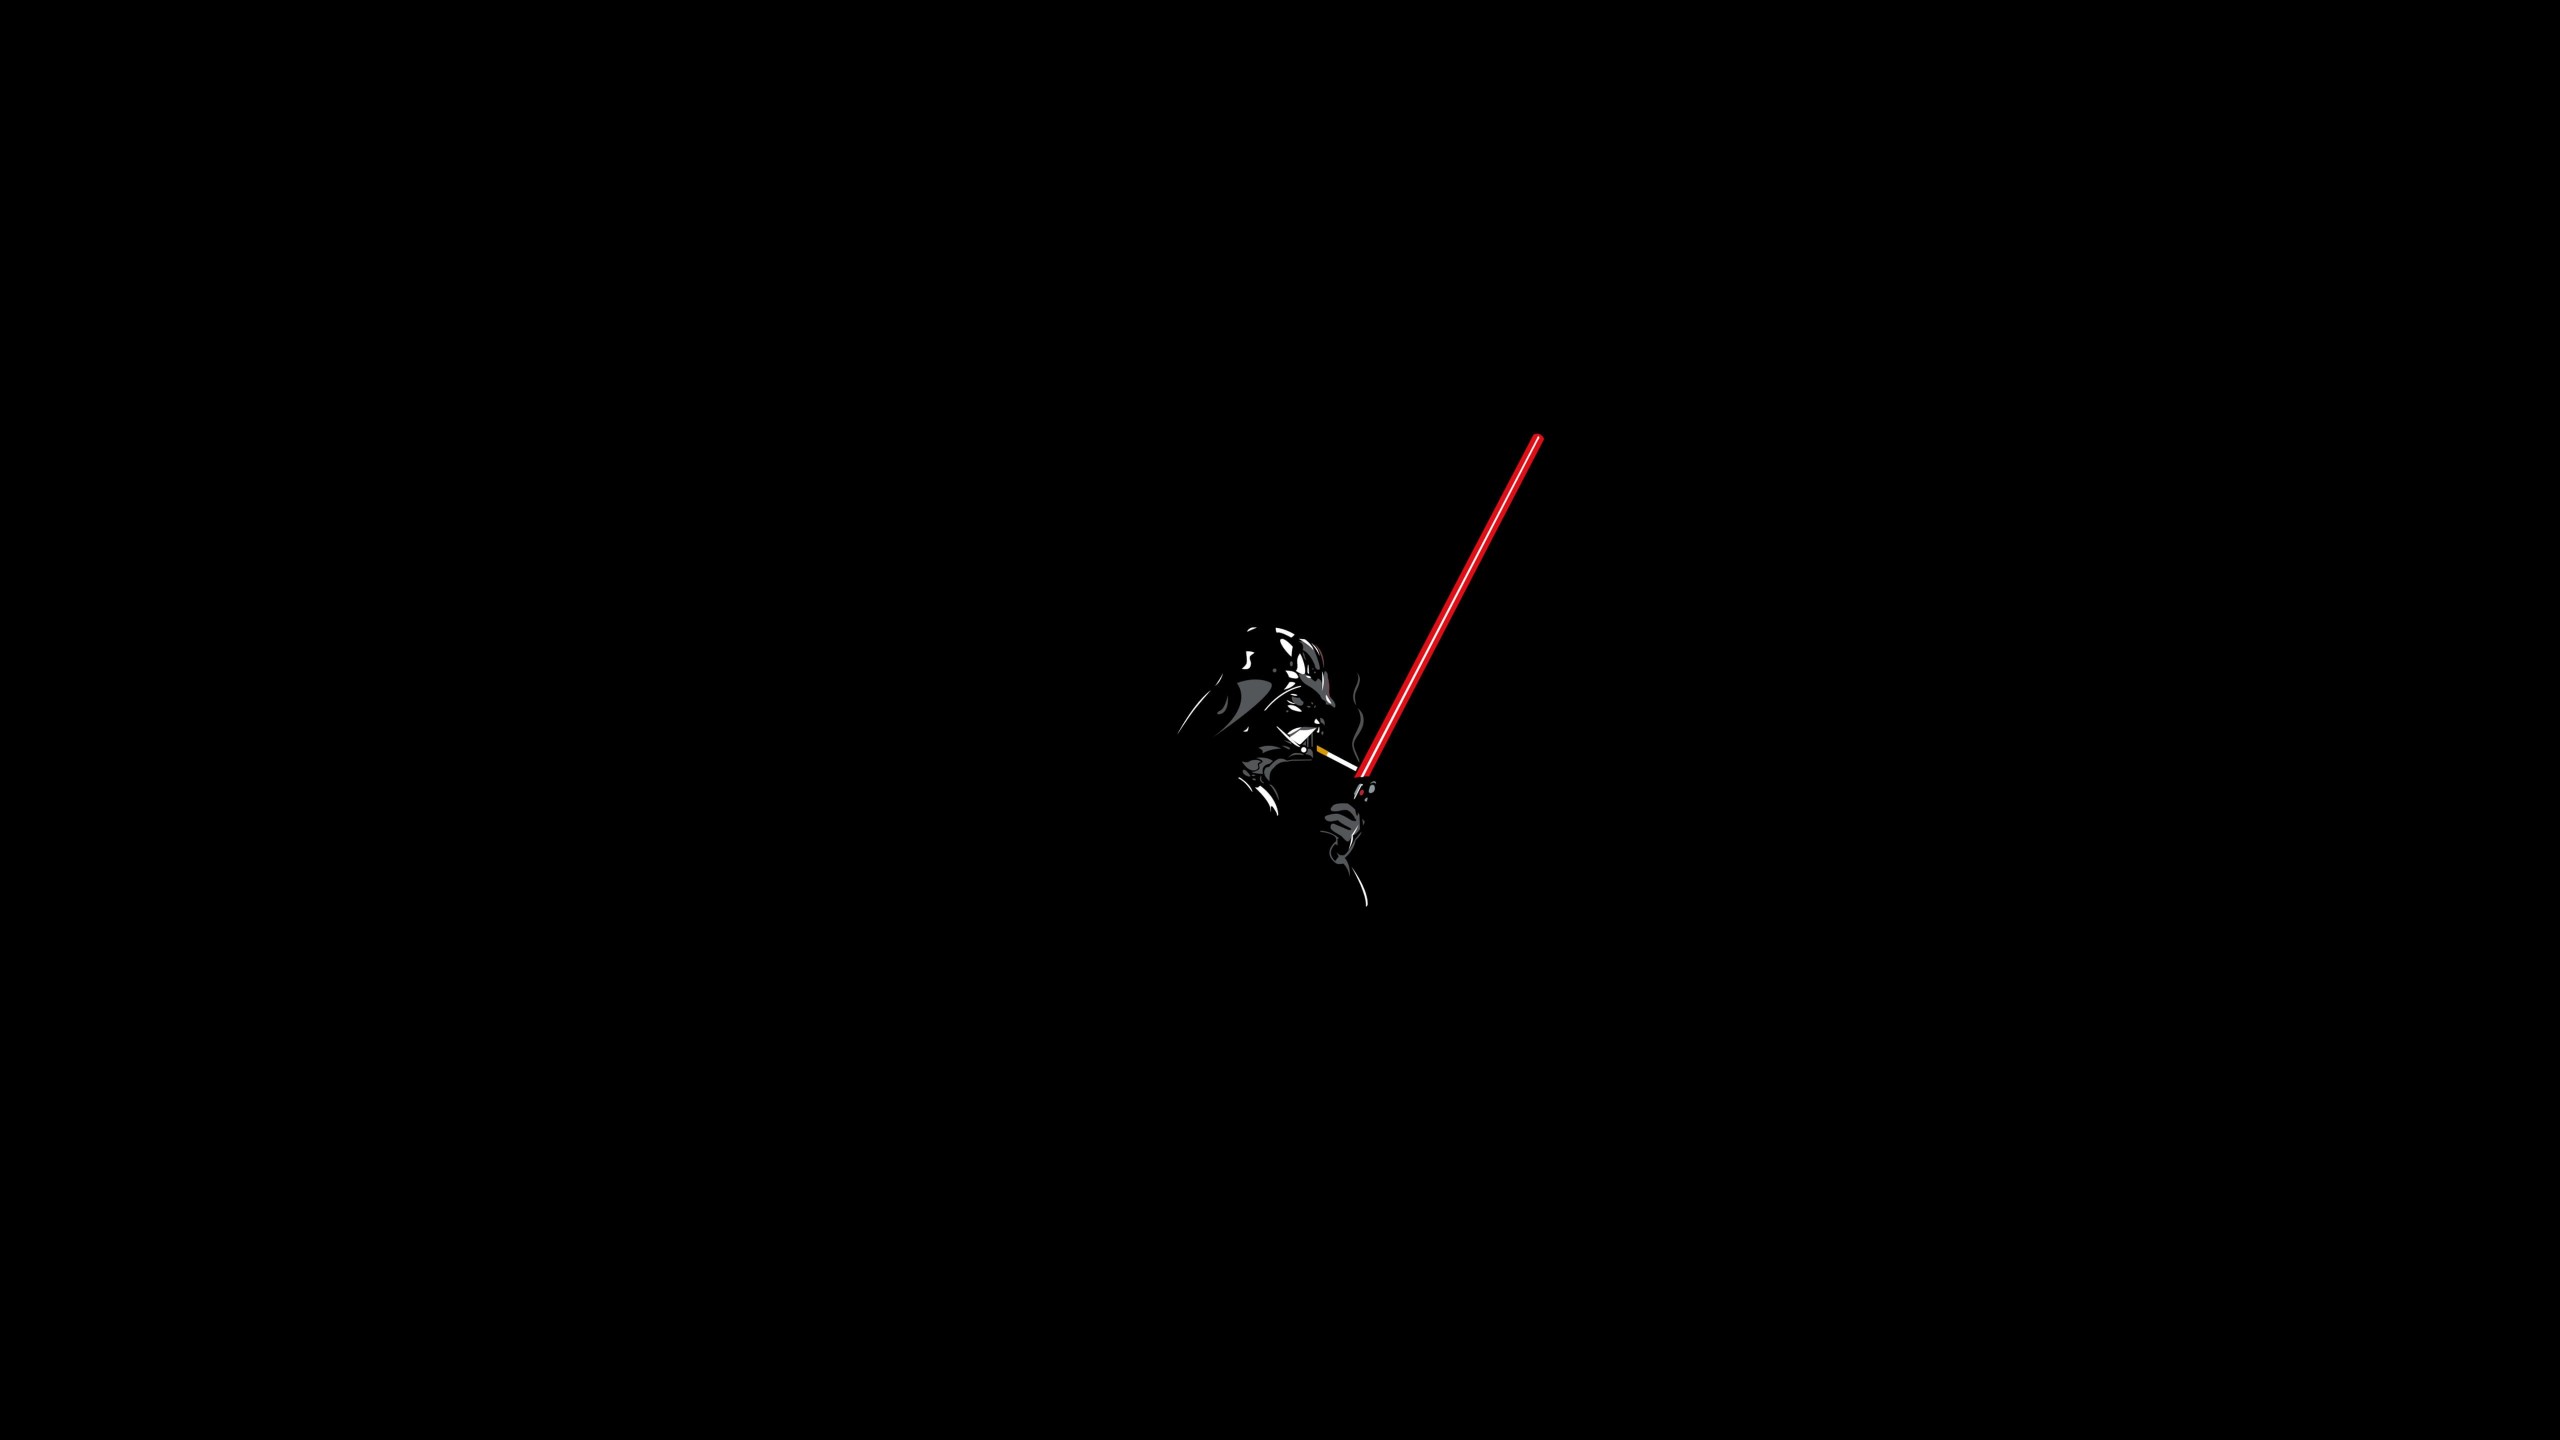 Darth Vader Lighting a Cigarette Wallpaper for Social Media YouTube Channel Art